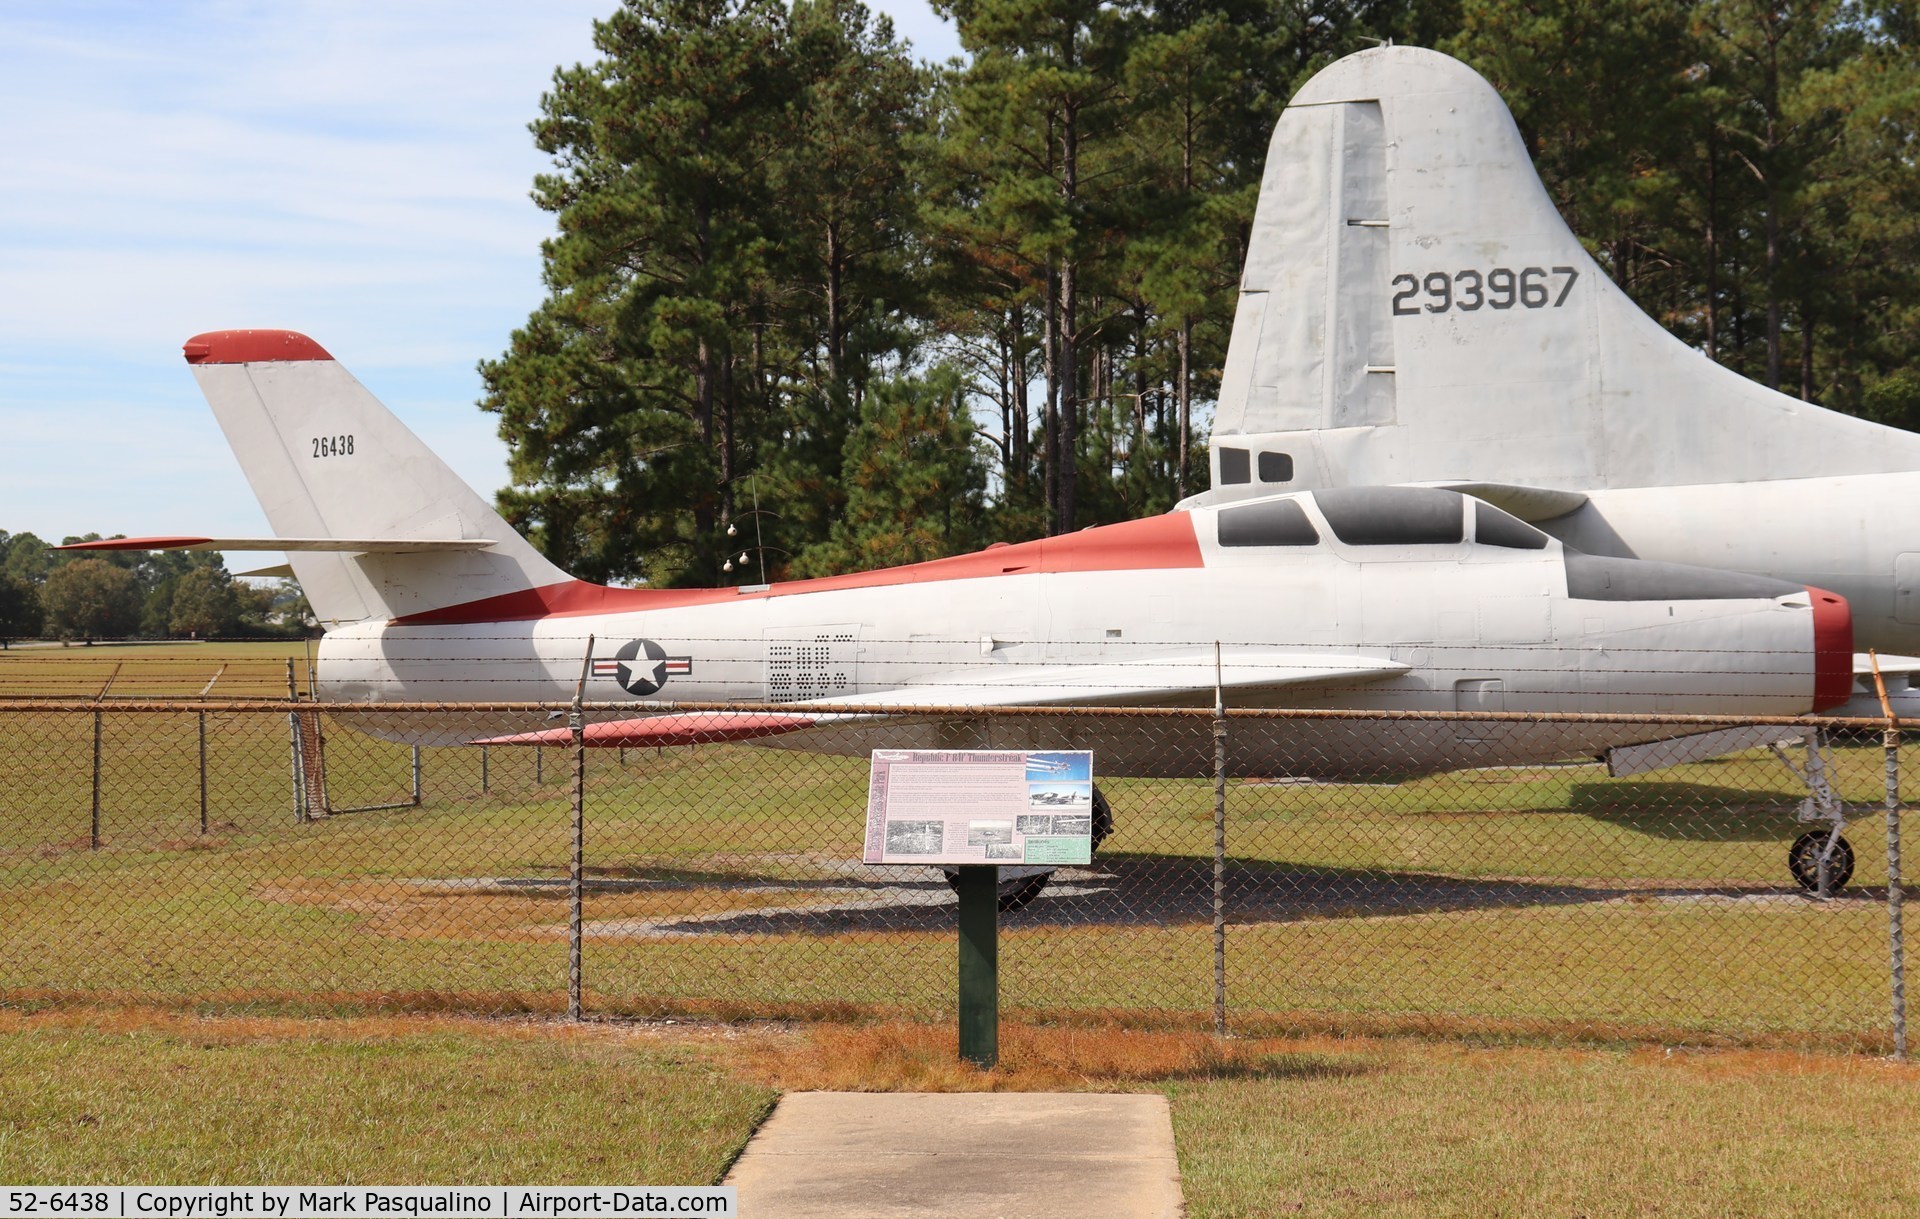 52-6438, 1952 Republic F-84F Thunderstreak C/N Not found 52-6438, Republic F-84F Thunderstreak